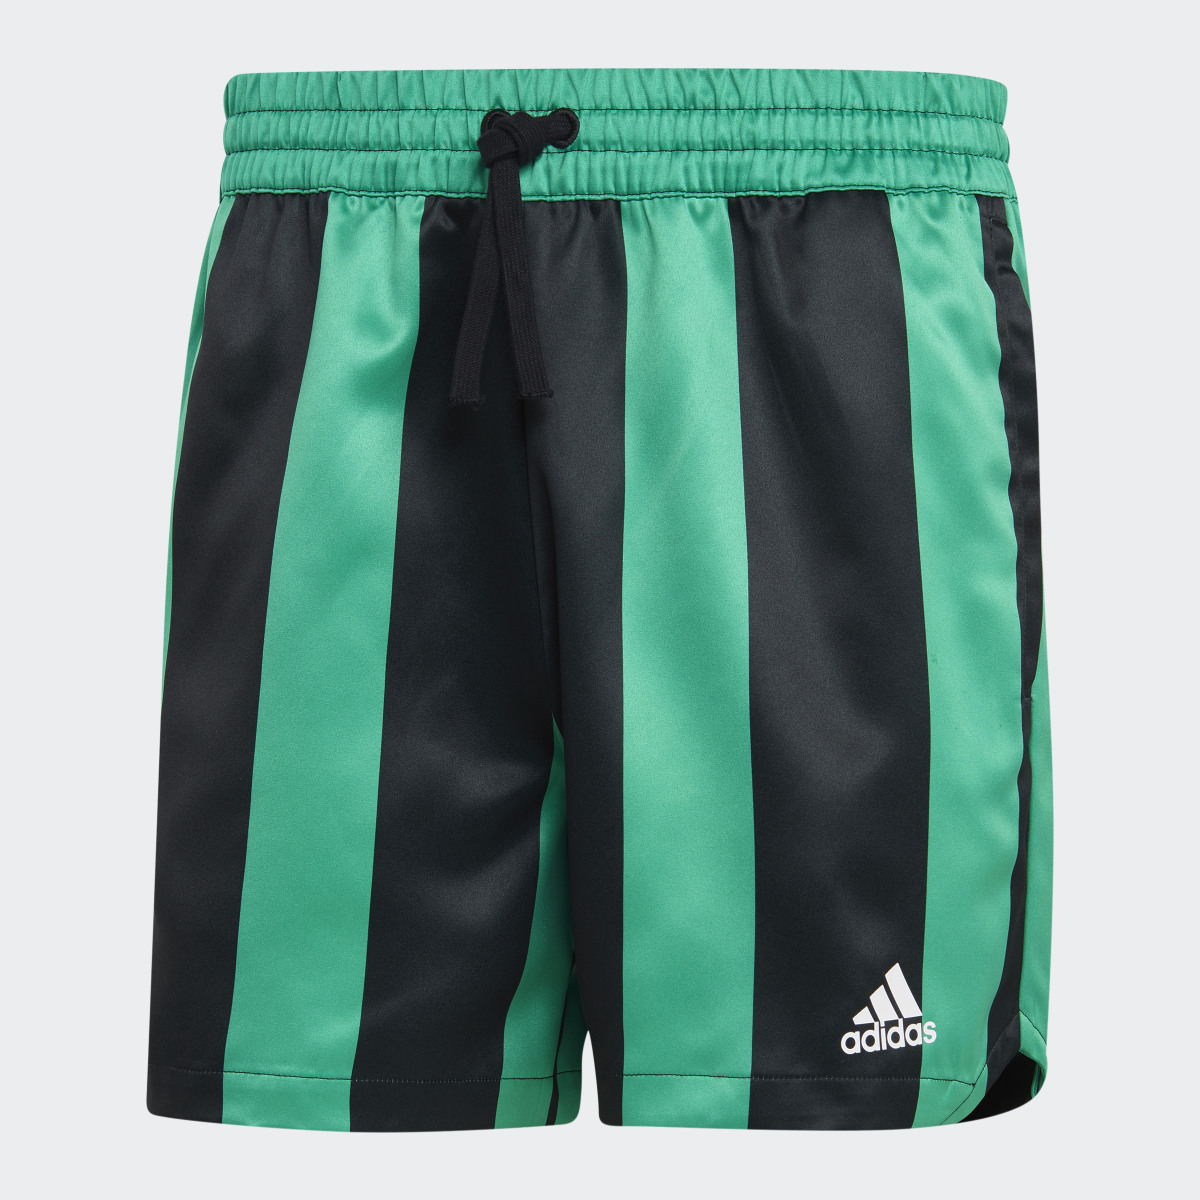 Adidas Satin Shorts. 4